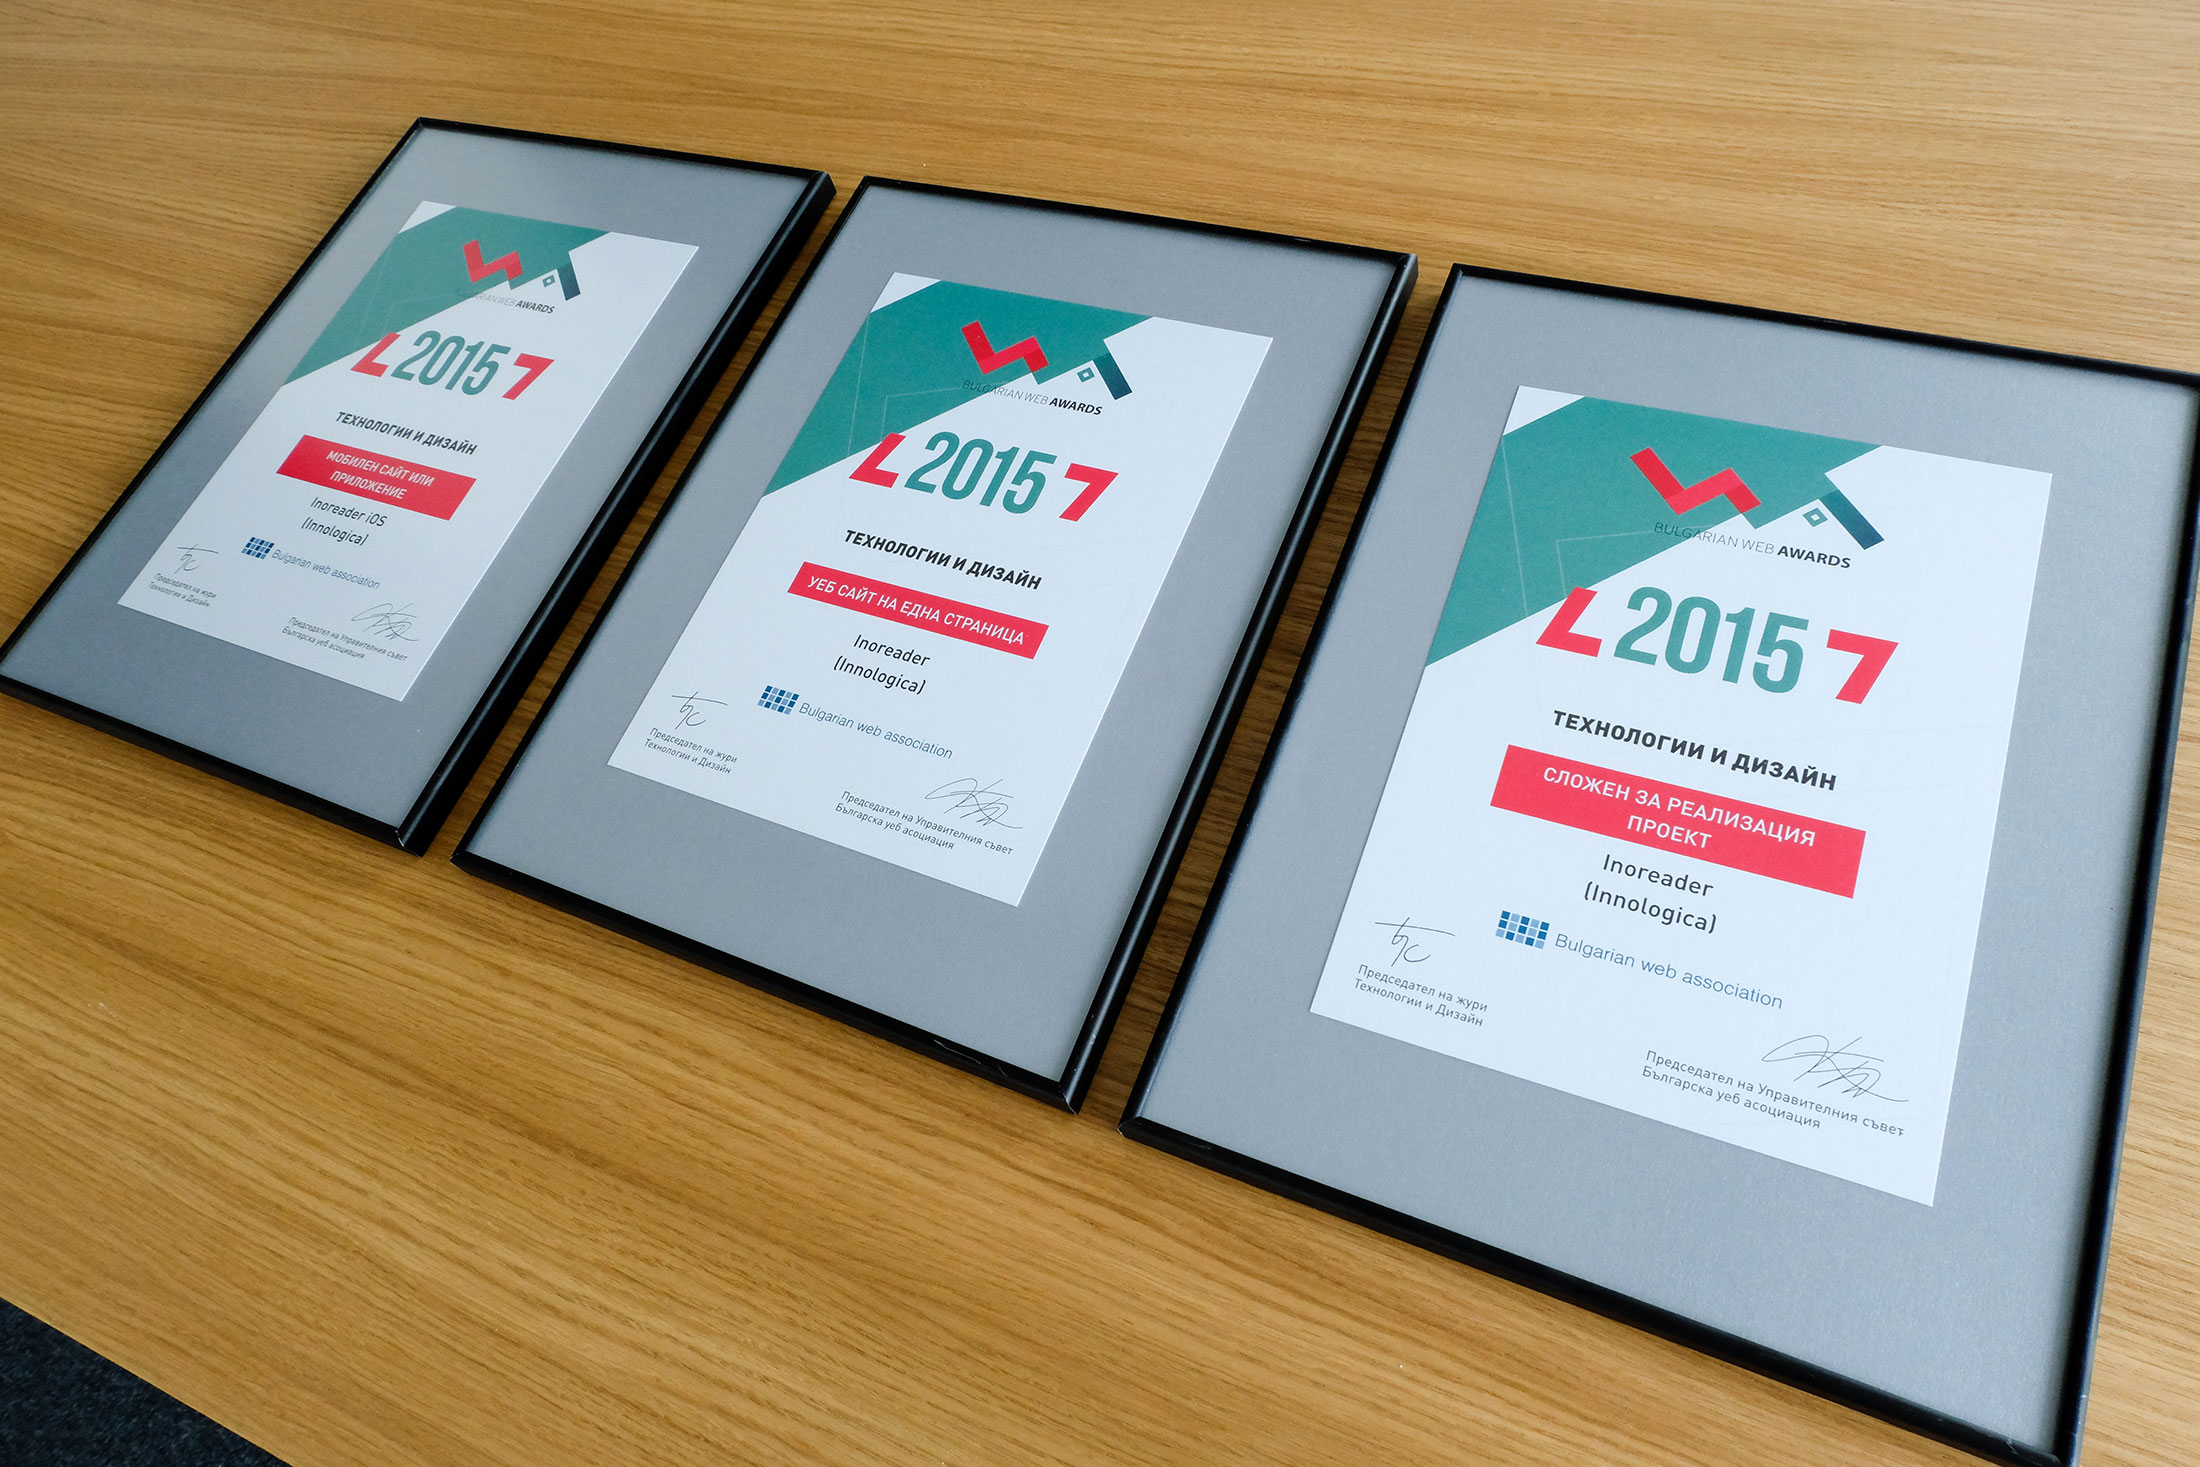 bulgarian web awards 2015